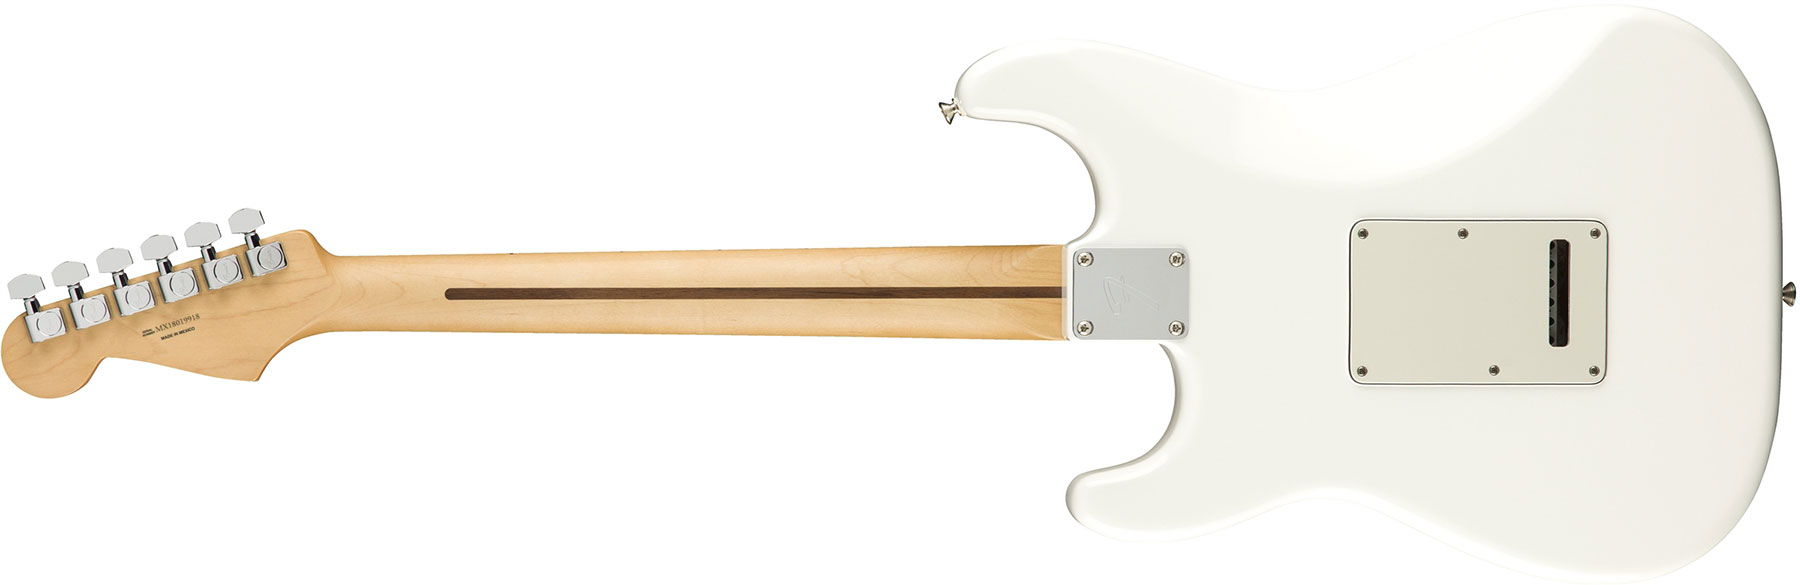 Fender Strat Player Mex Hss Mn - Polar White - Str shape electric guitar - Variation 1